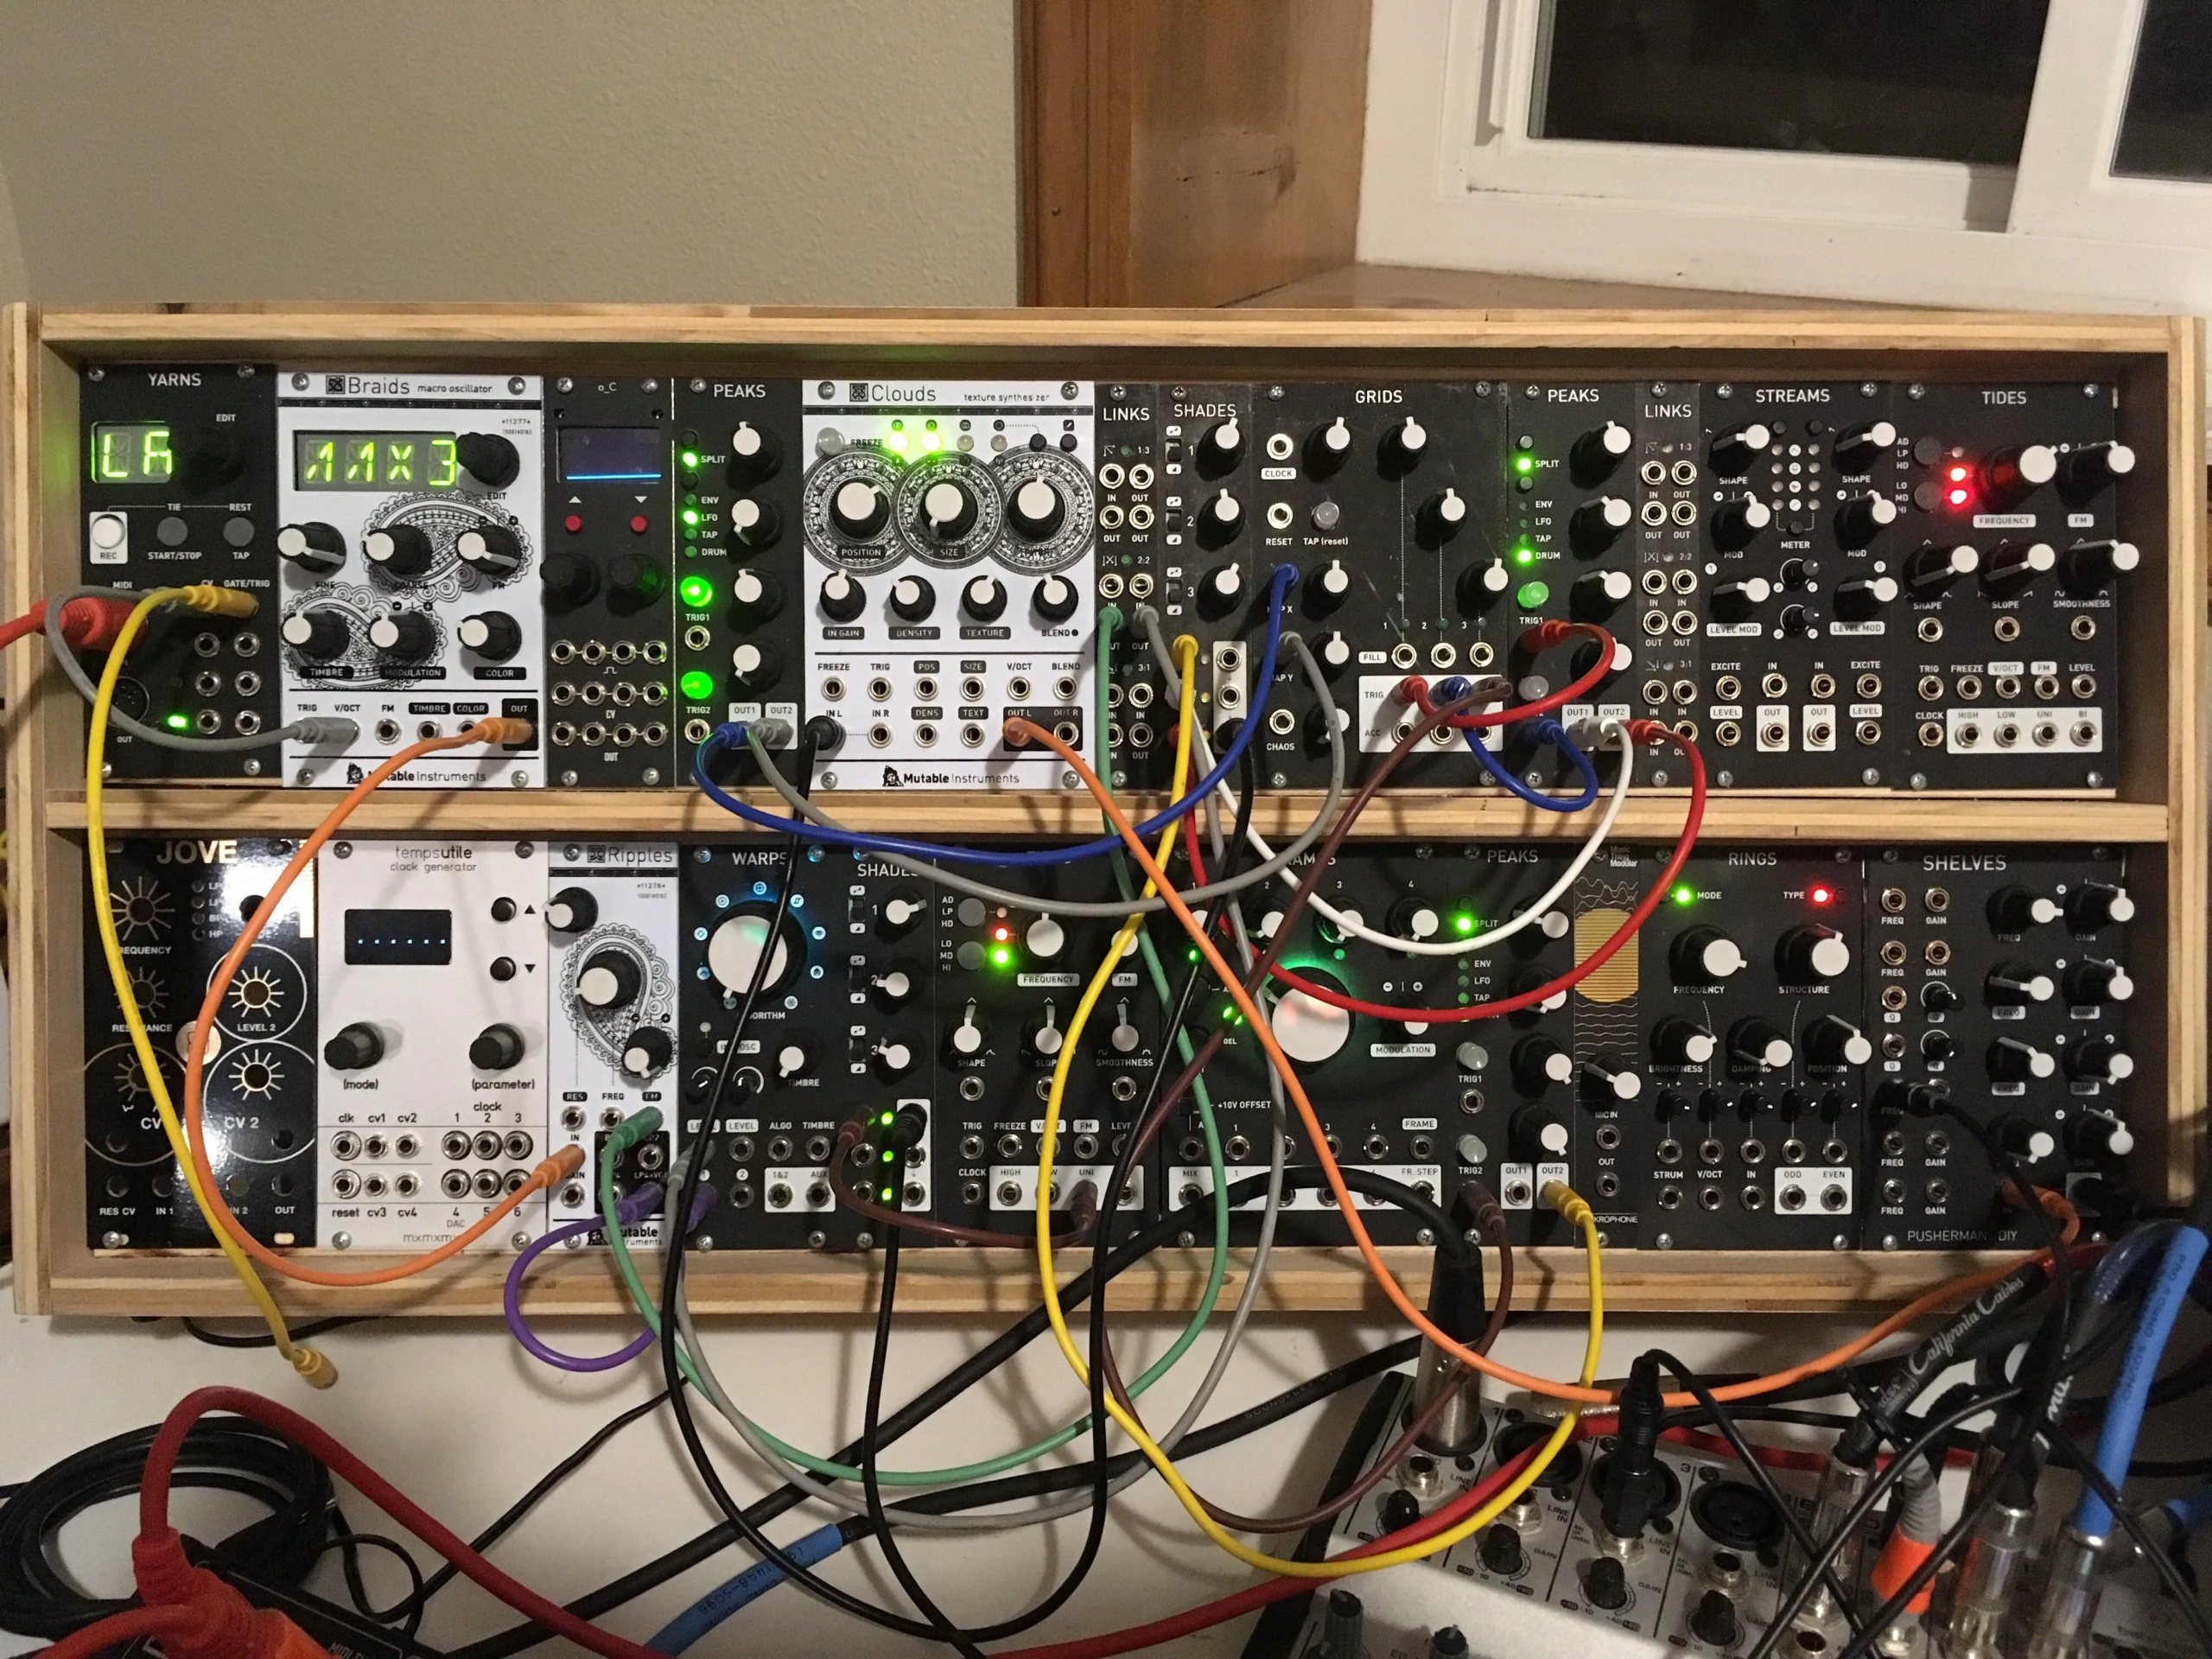 A modular synth setup based on the Eurorack standard